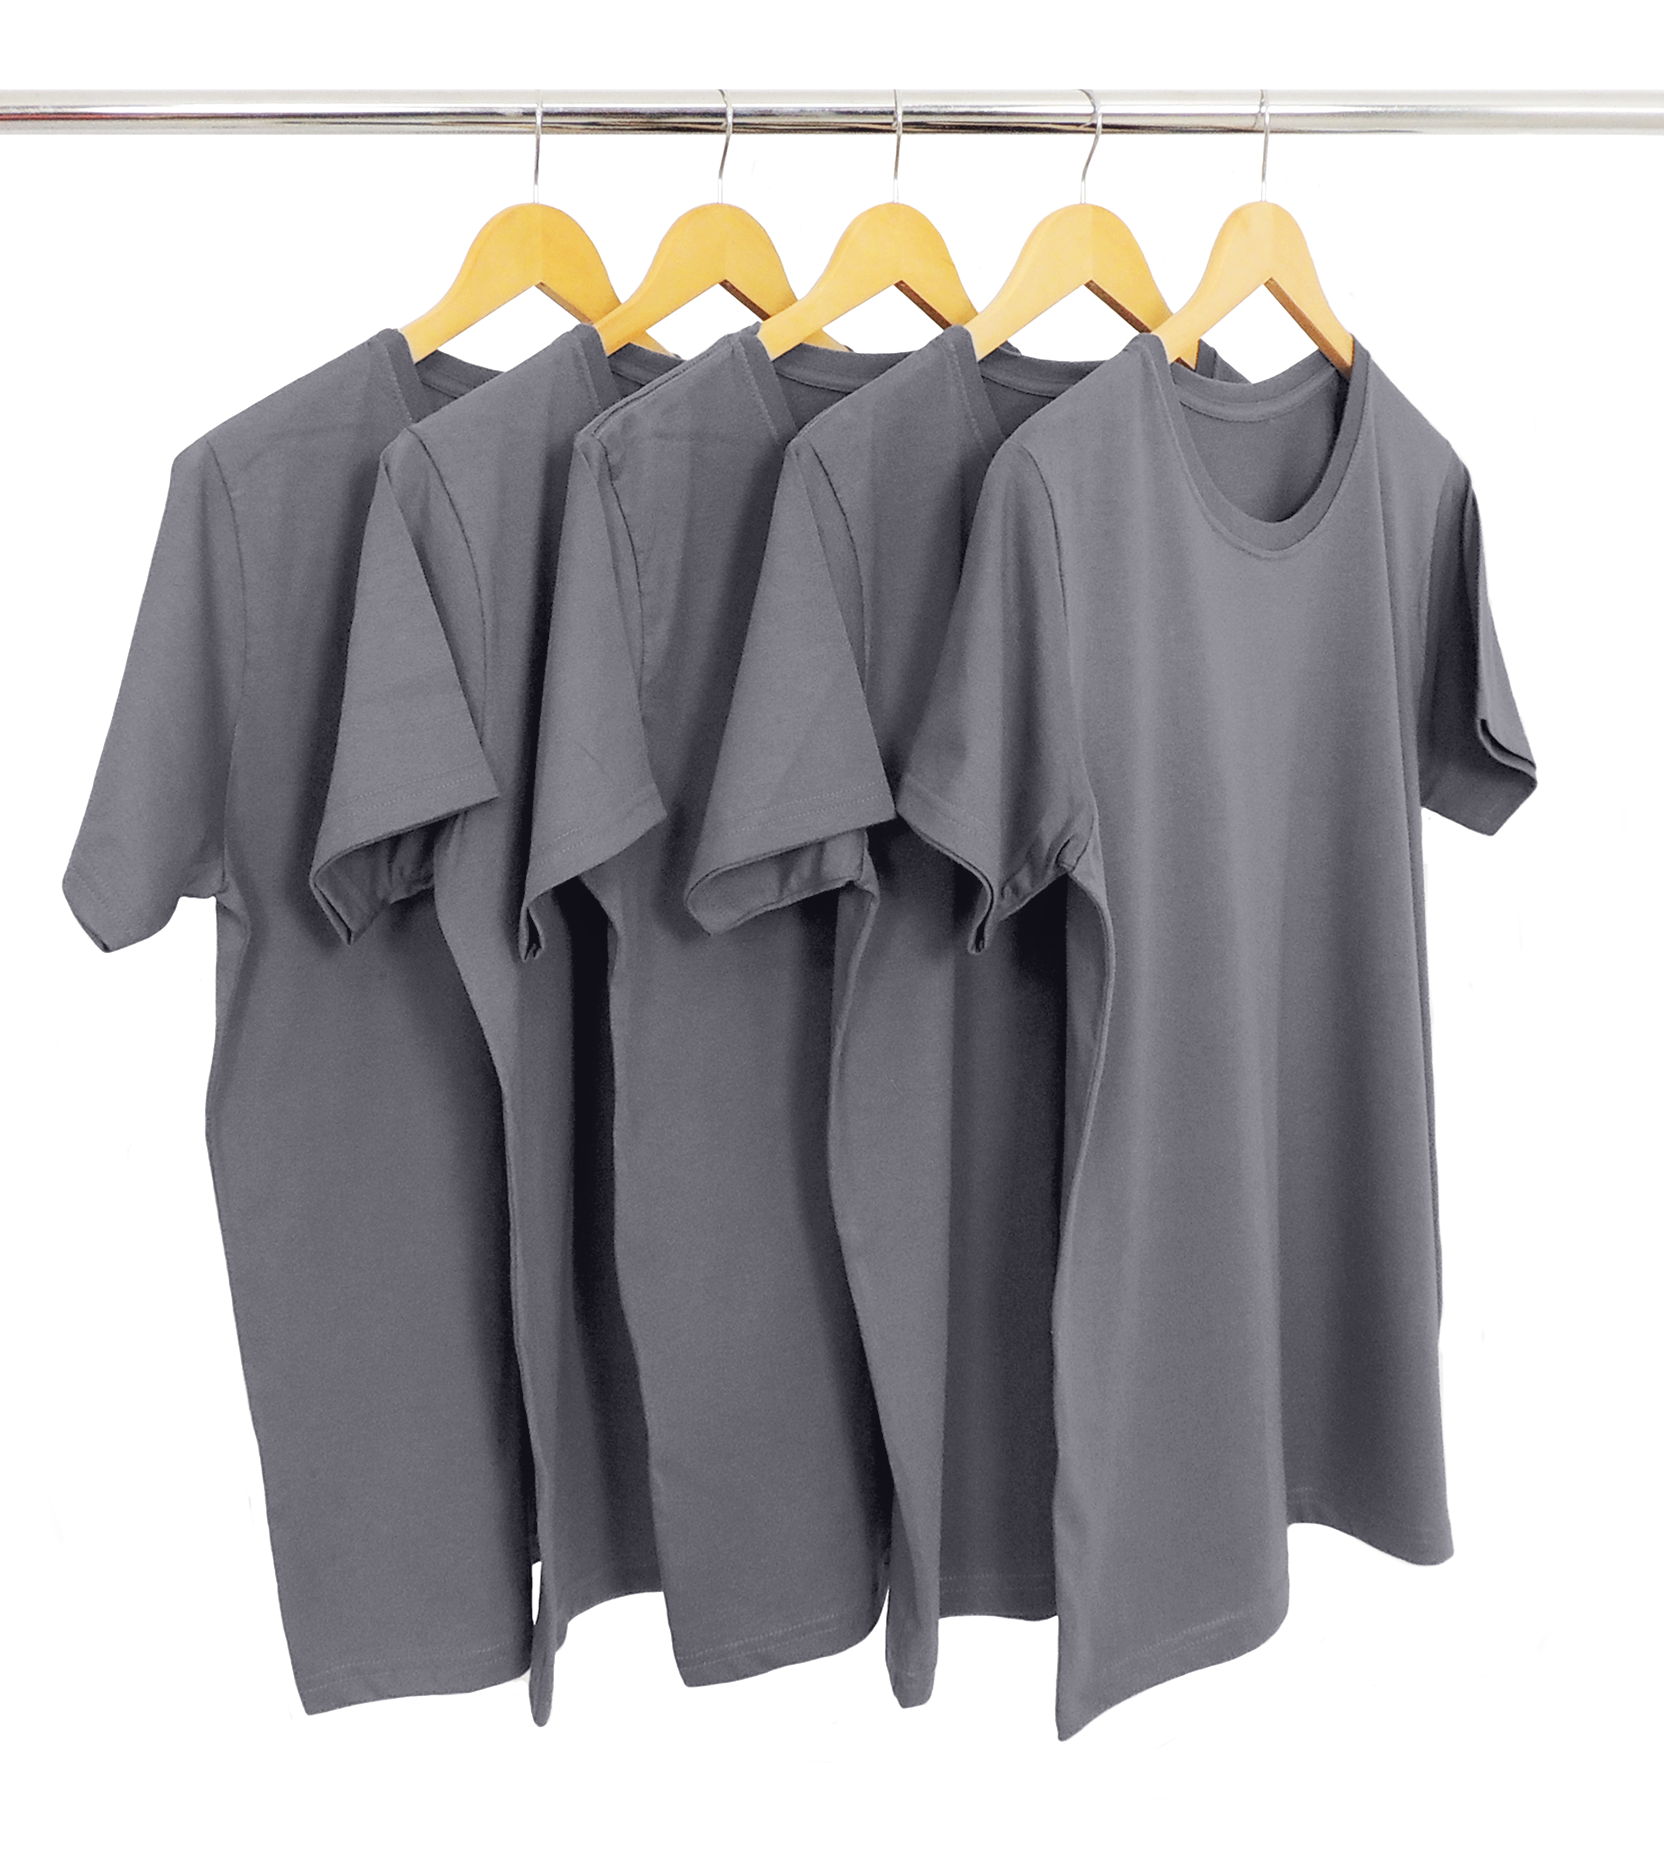 KIT 5 Camisetas de Algodão Premium Pretas